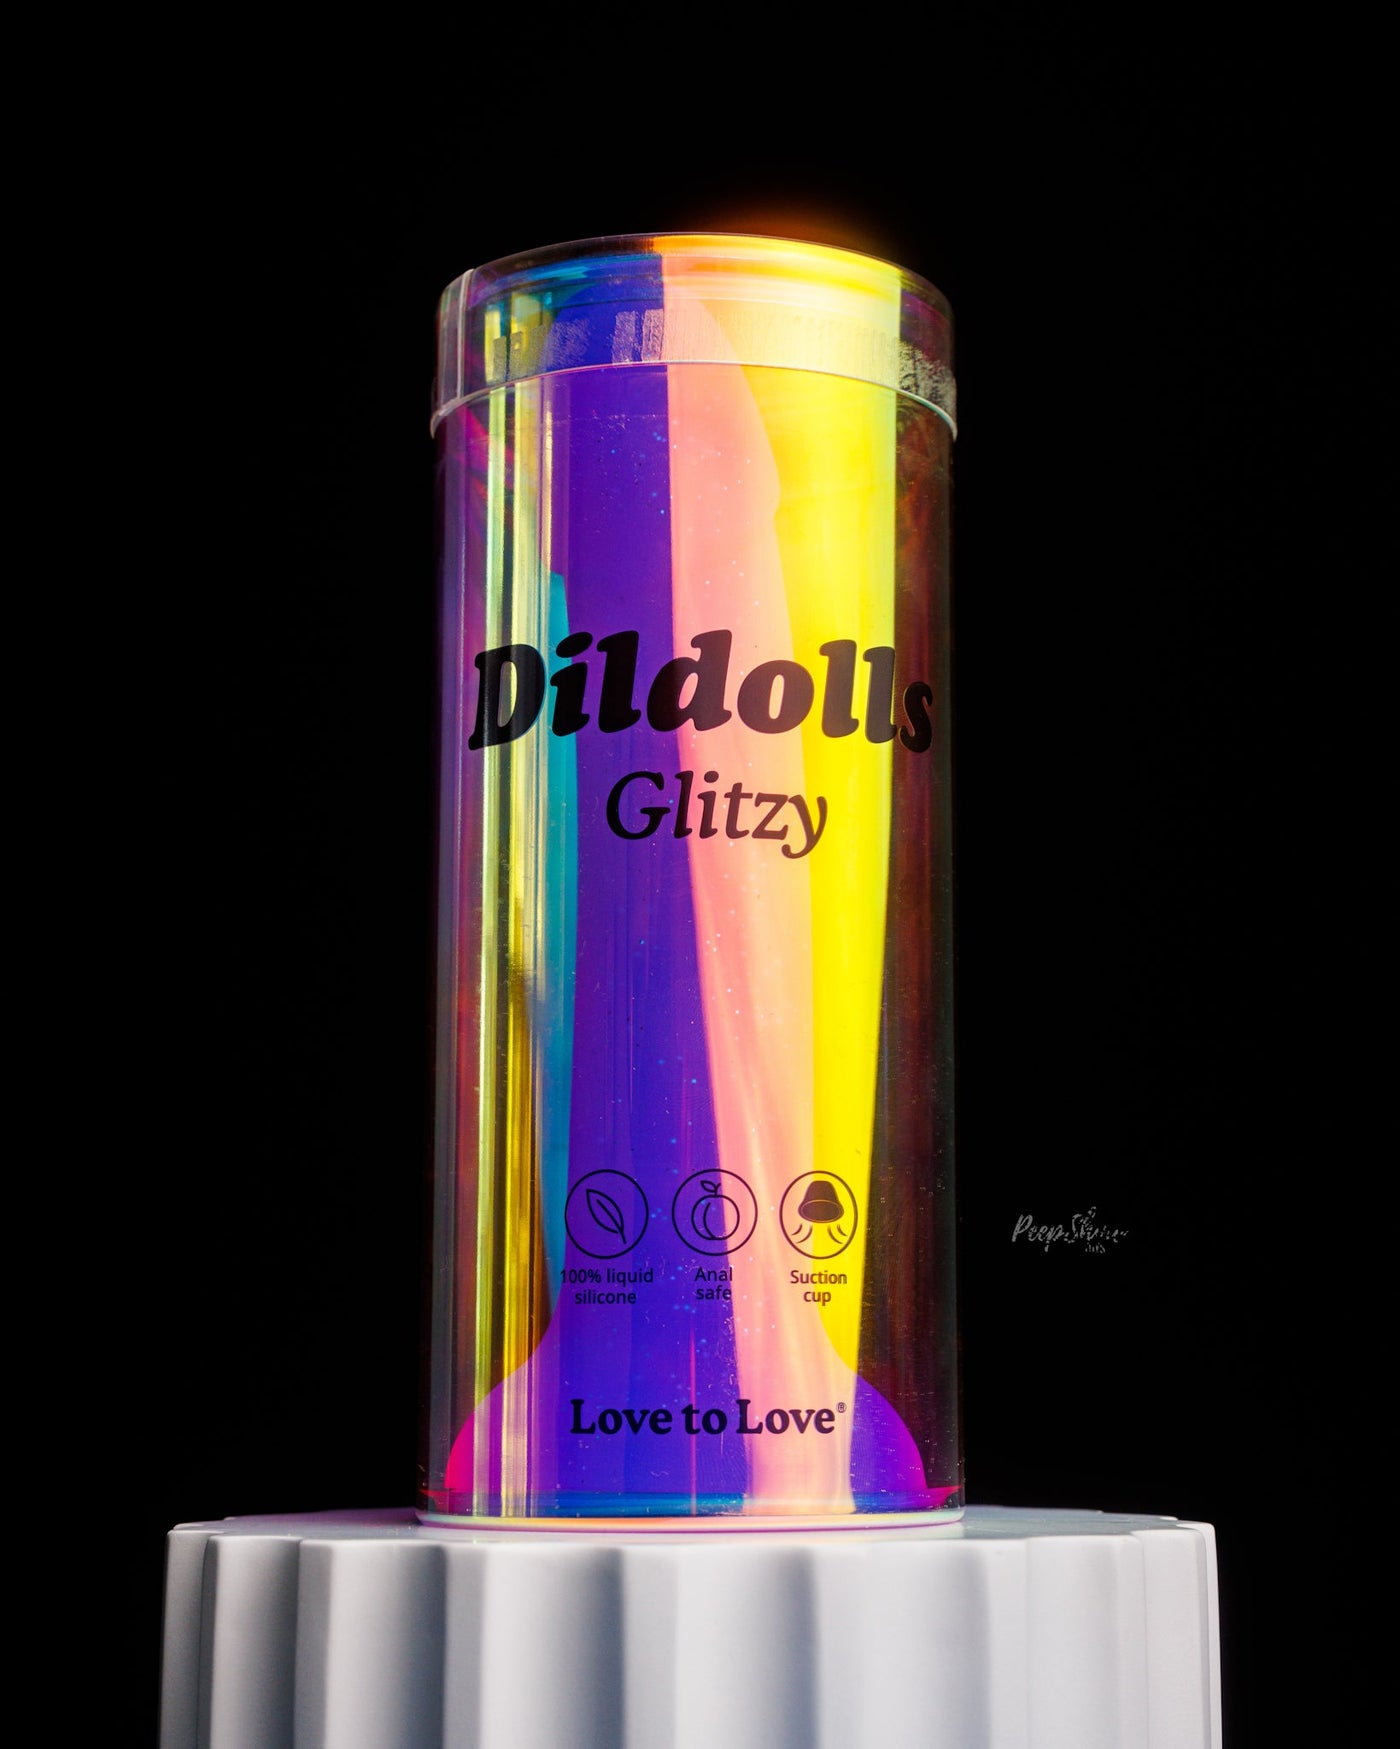 Dildodolls Glitzy Dildo Packaging